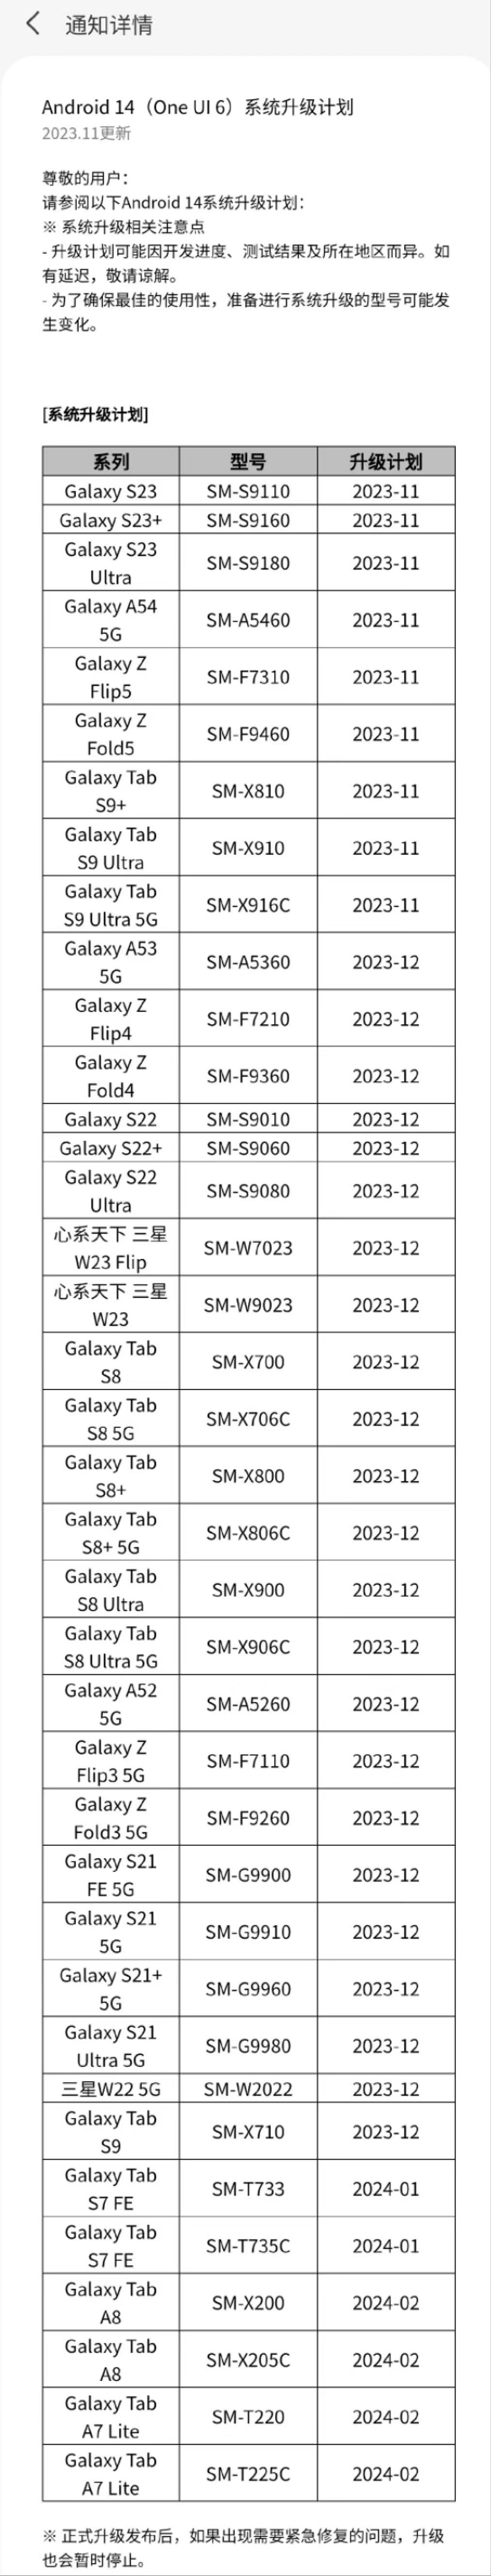 基于 Android 14，三星 Galaxy S21 系列手机海外推送 One UI 6 正式版 - 2